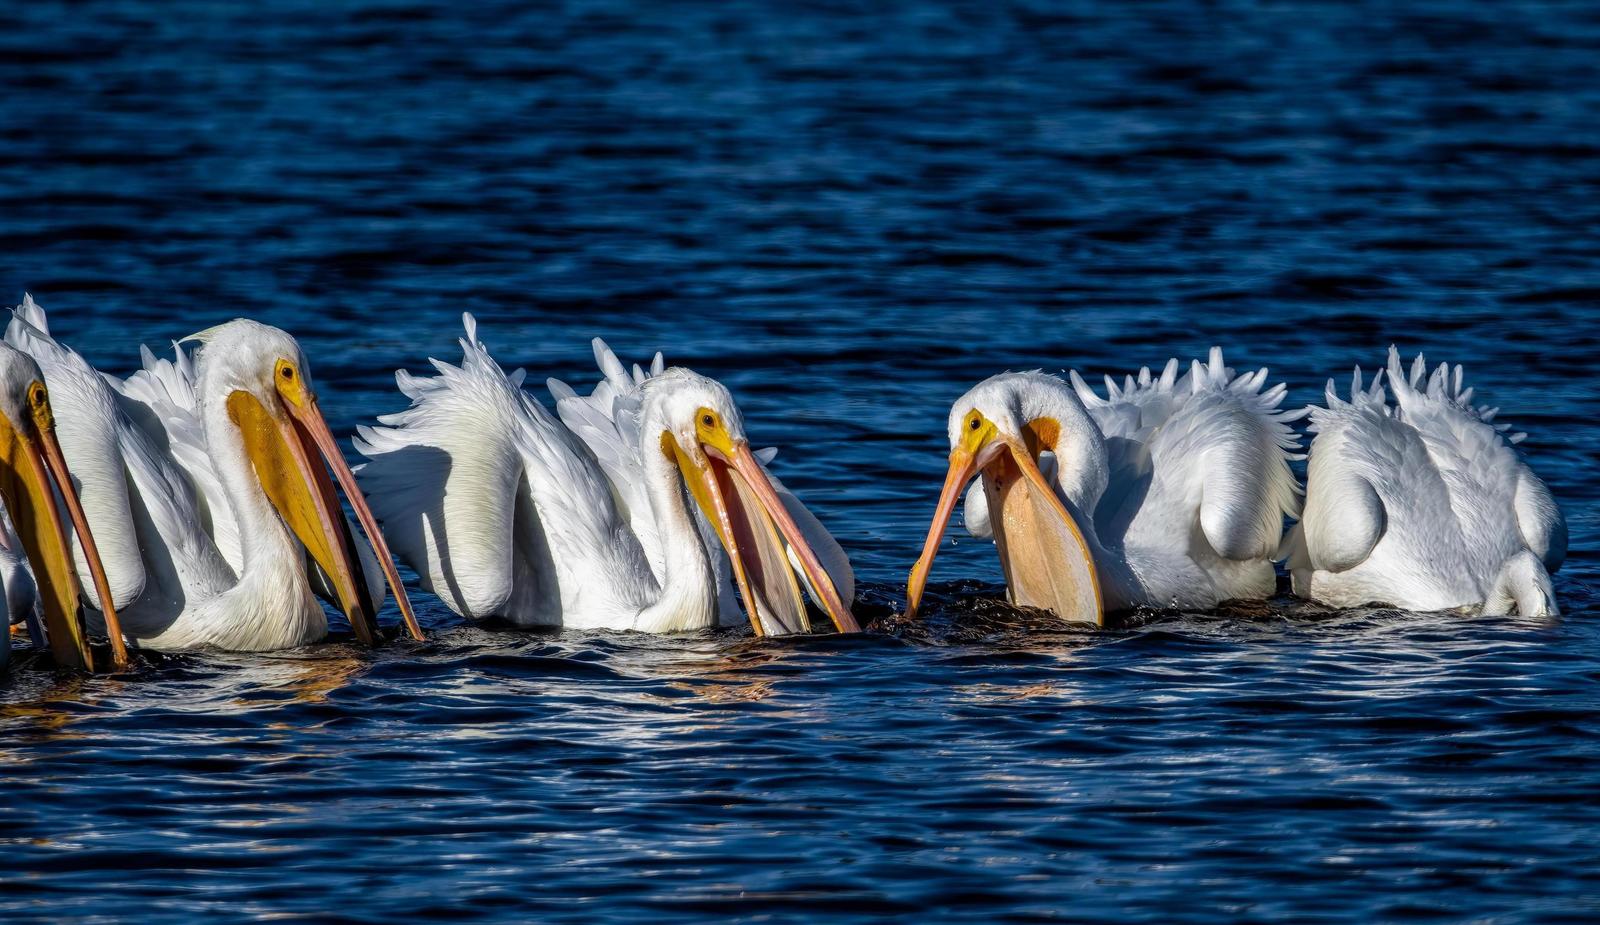 American White Pelican Photo by Robert Reppert